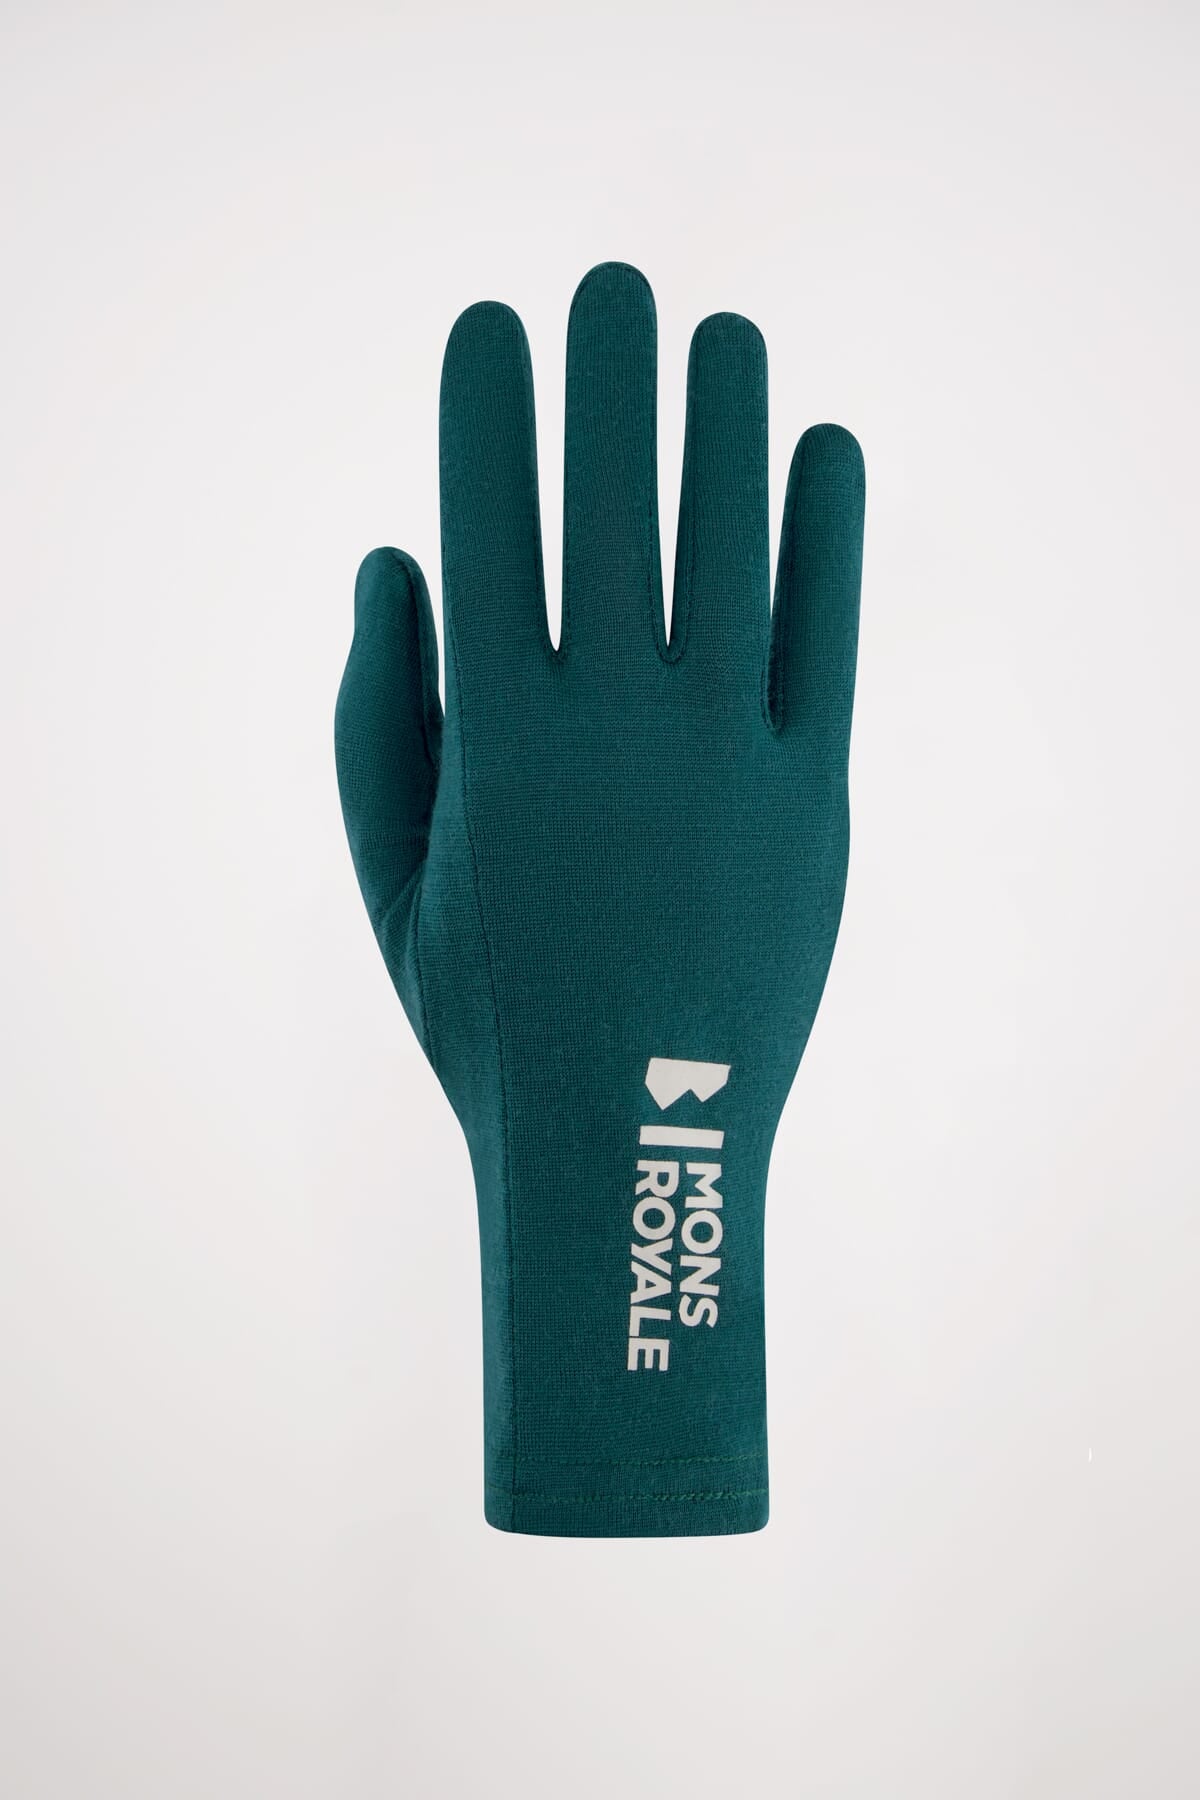 Volta Merino Glove Liner - Evergreen